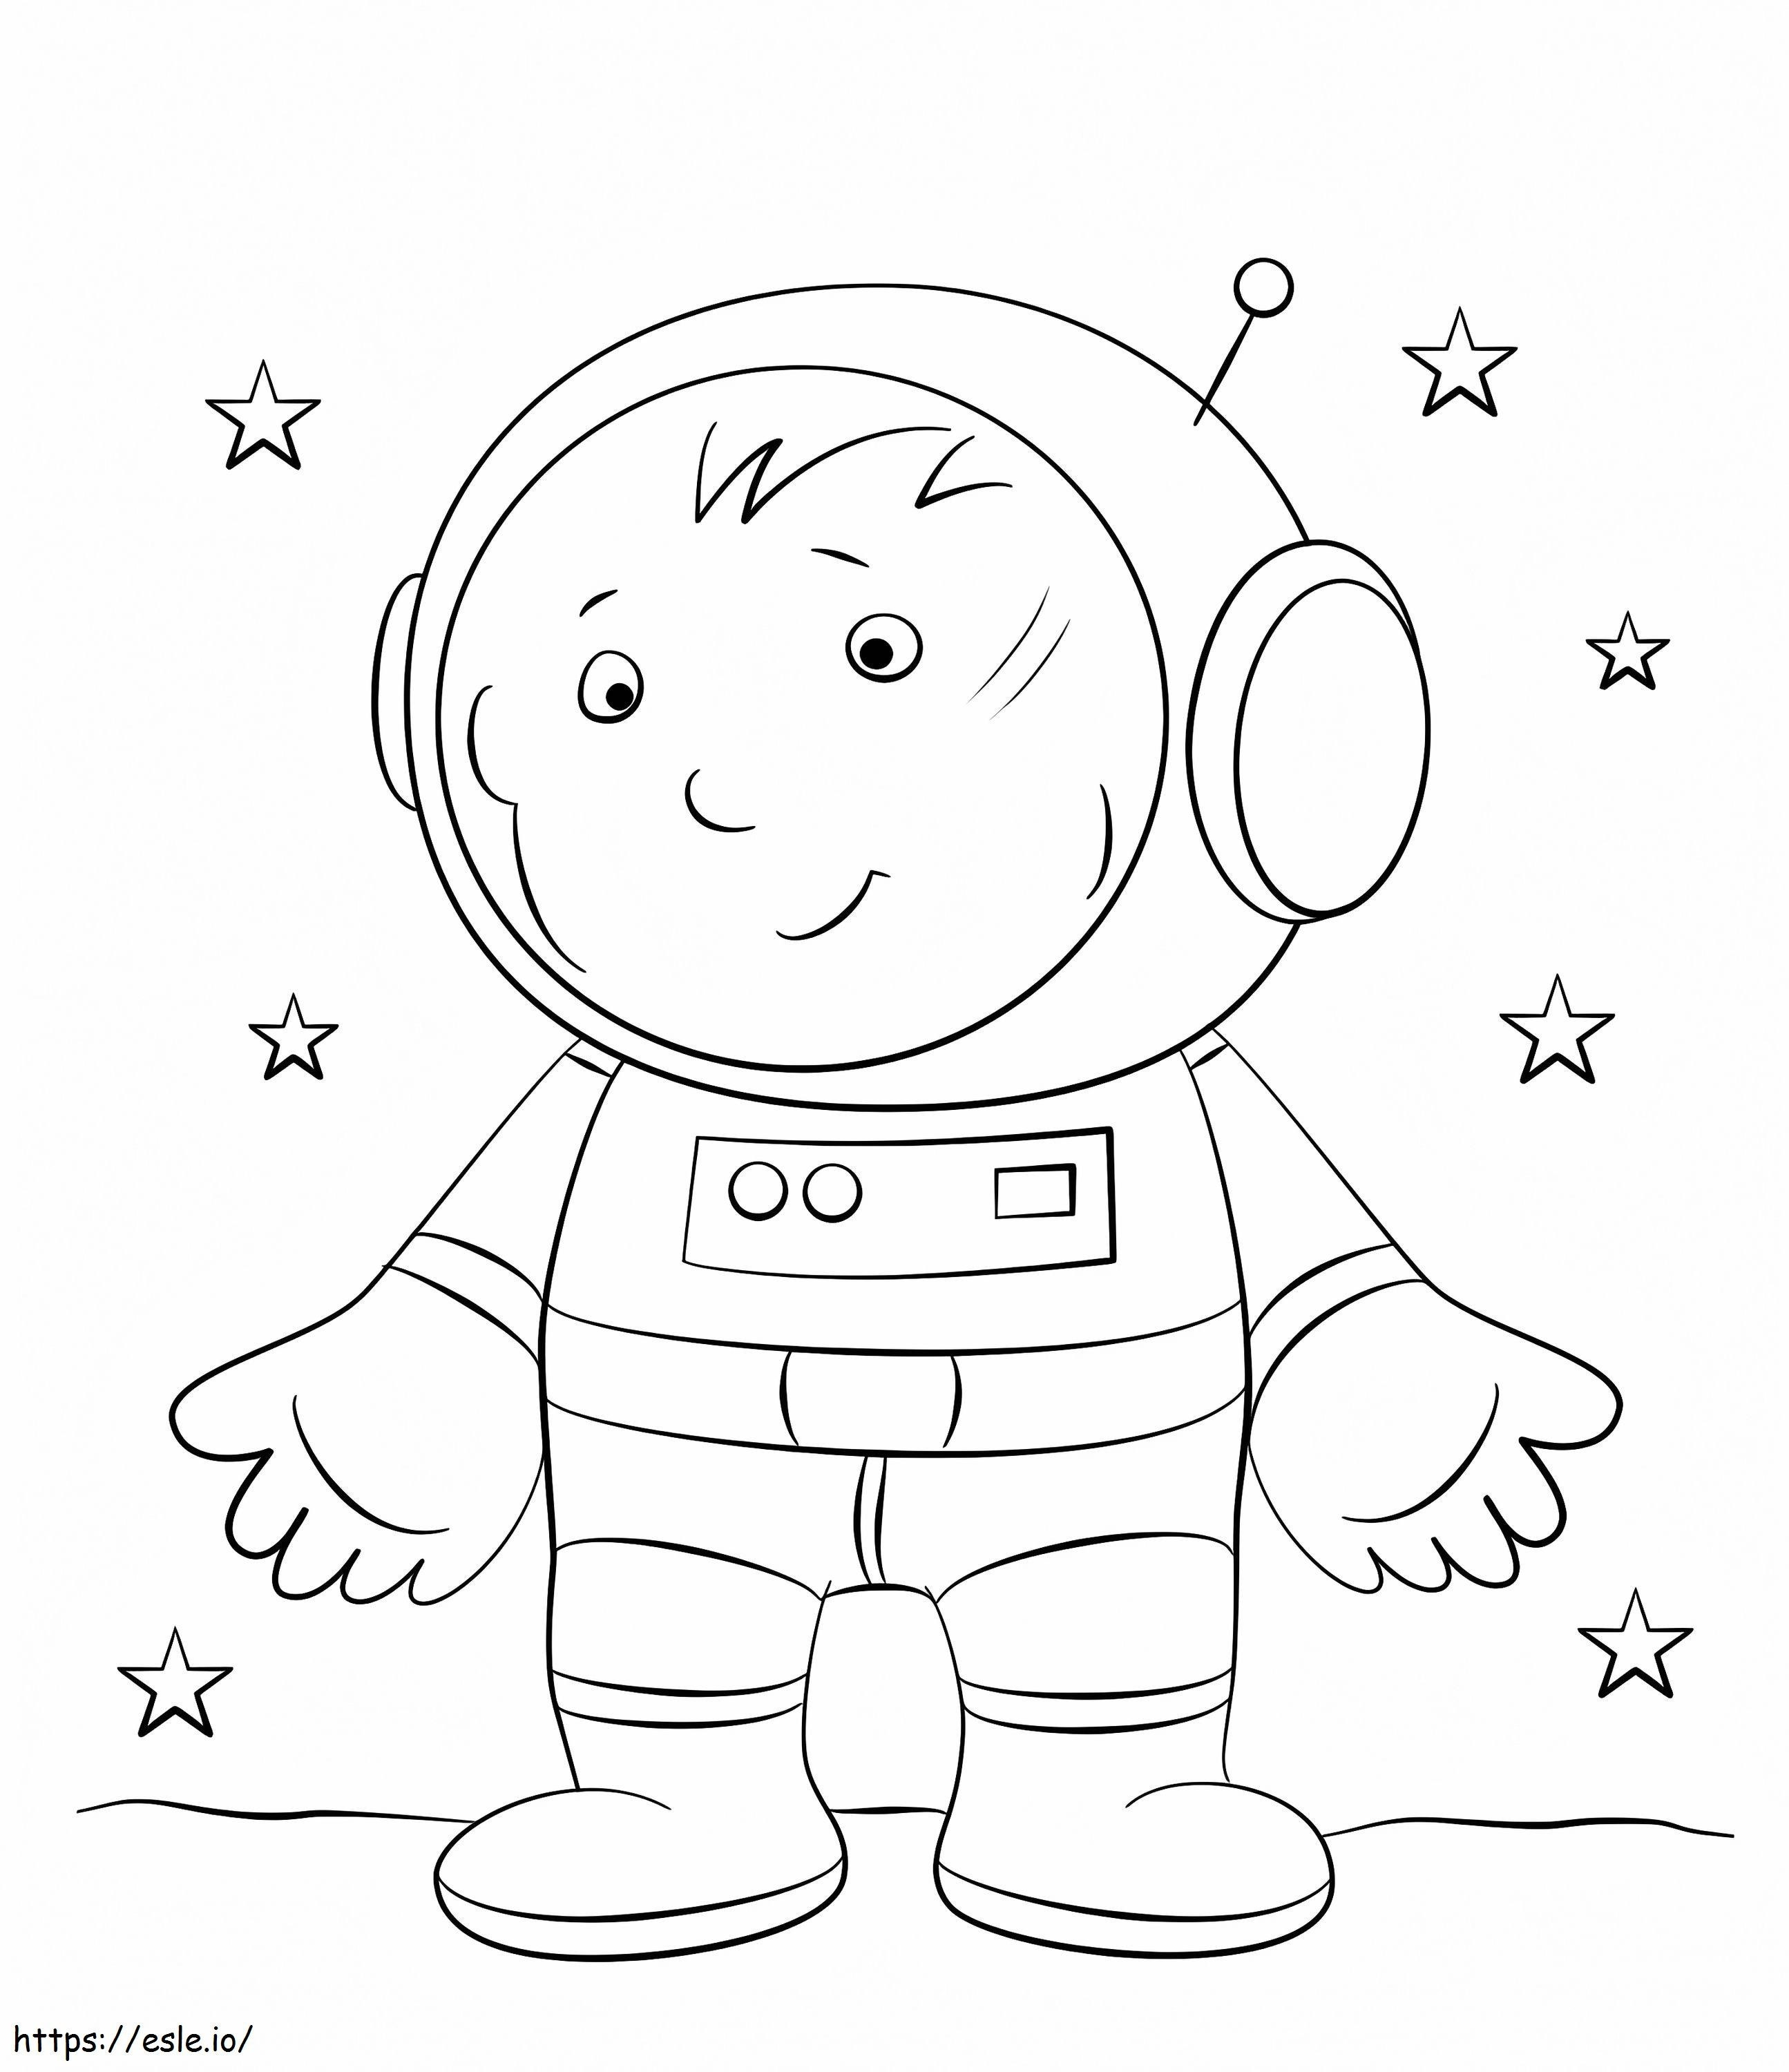 1559870219 Junge Astronaut A4 ausmalbilder